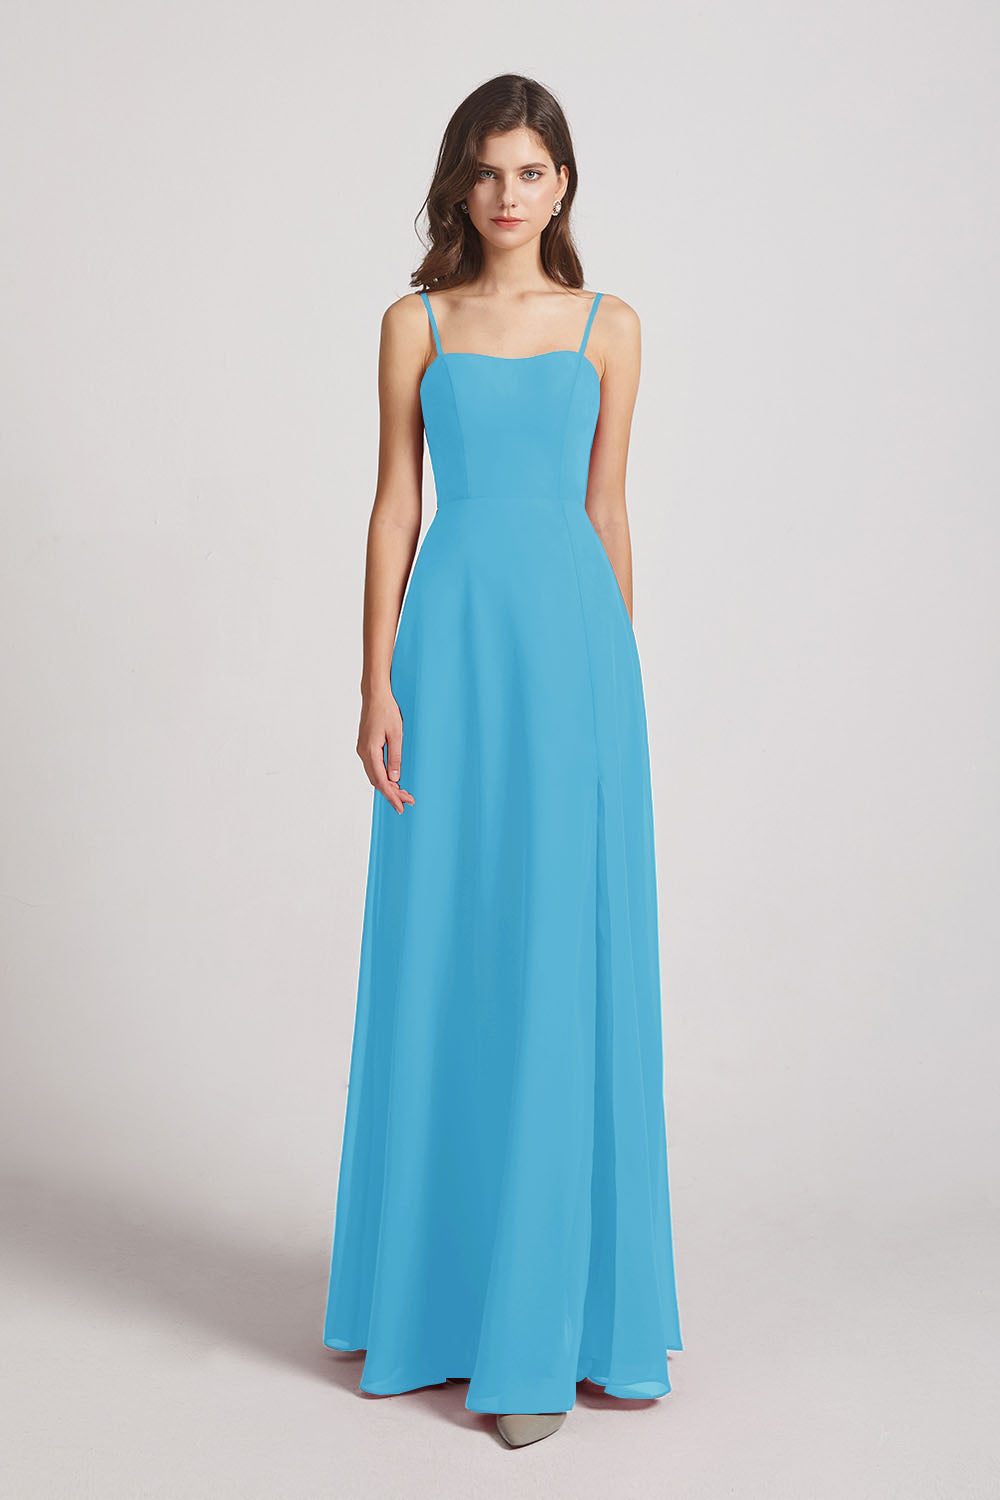 Alfa Bridal Ice Blue Spaghetti Straps Long Chiffon Bridesmaid Dresses with Side Slit (AF0112)